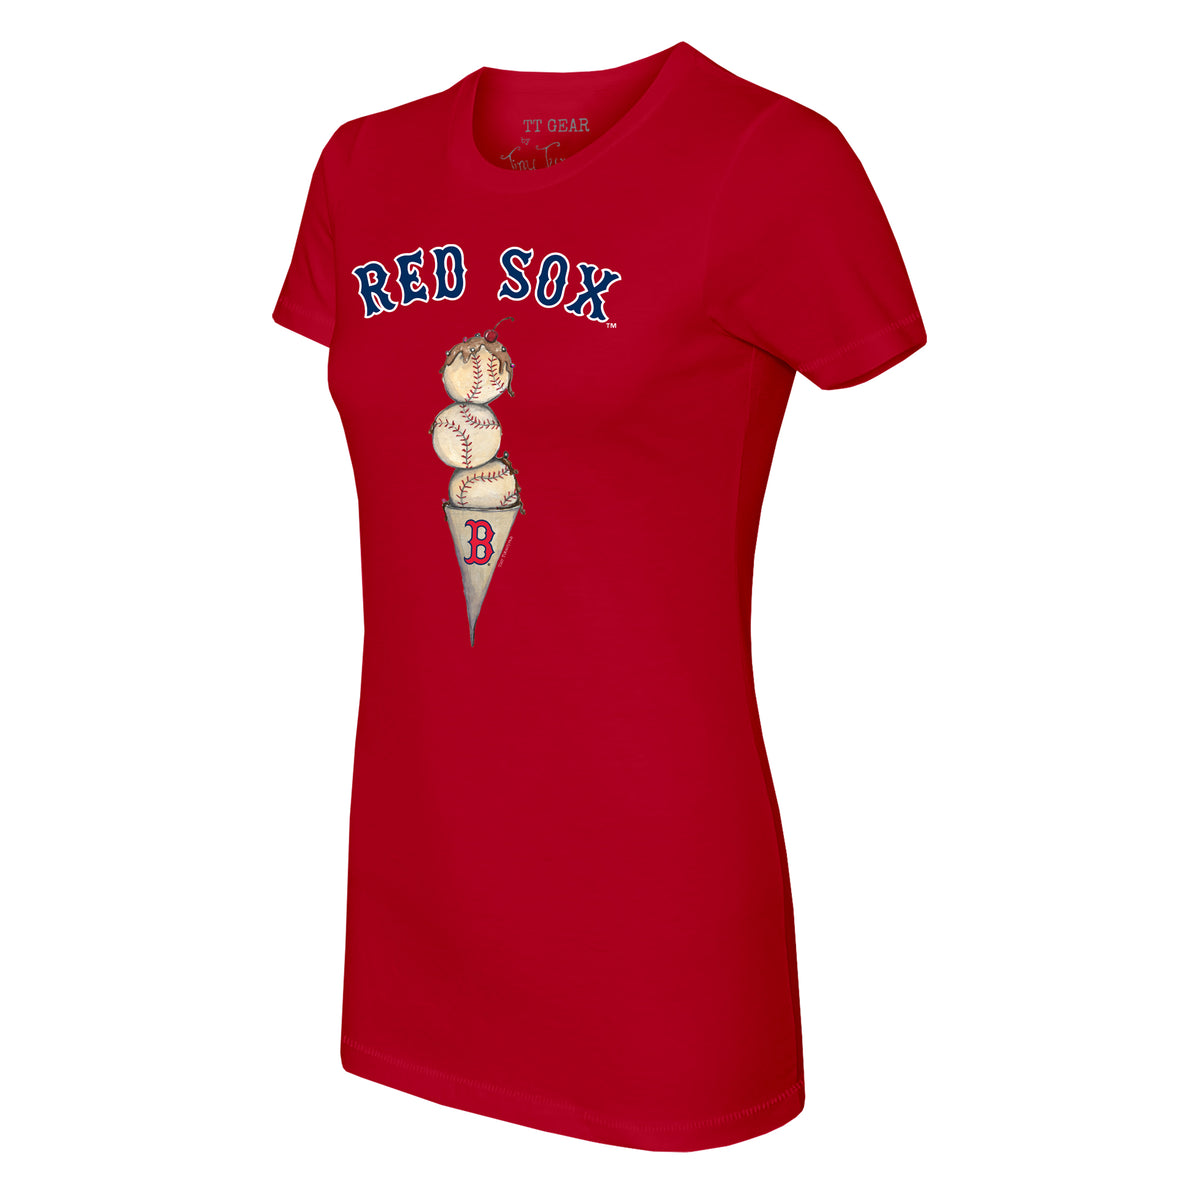 Boston Red Sox Women's Distressed Long Sleeve T-Shirt Blue